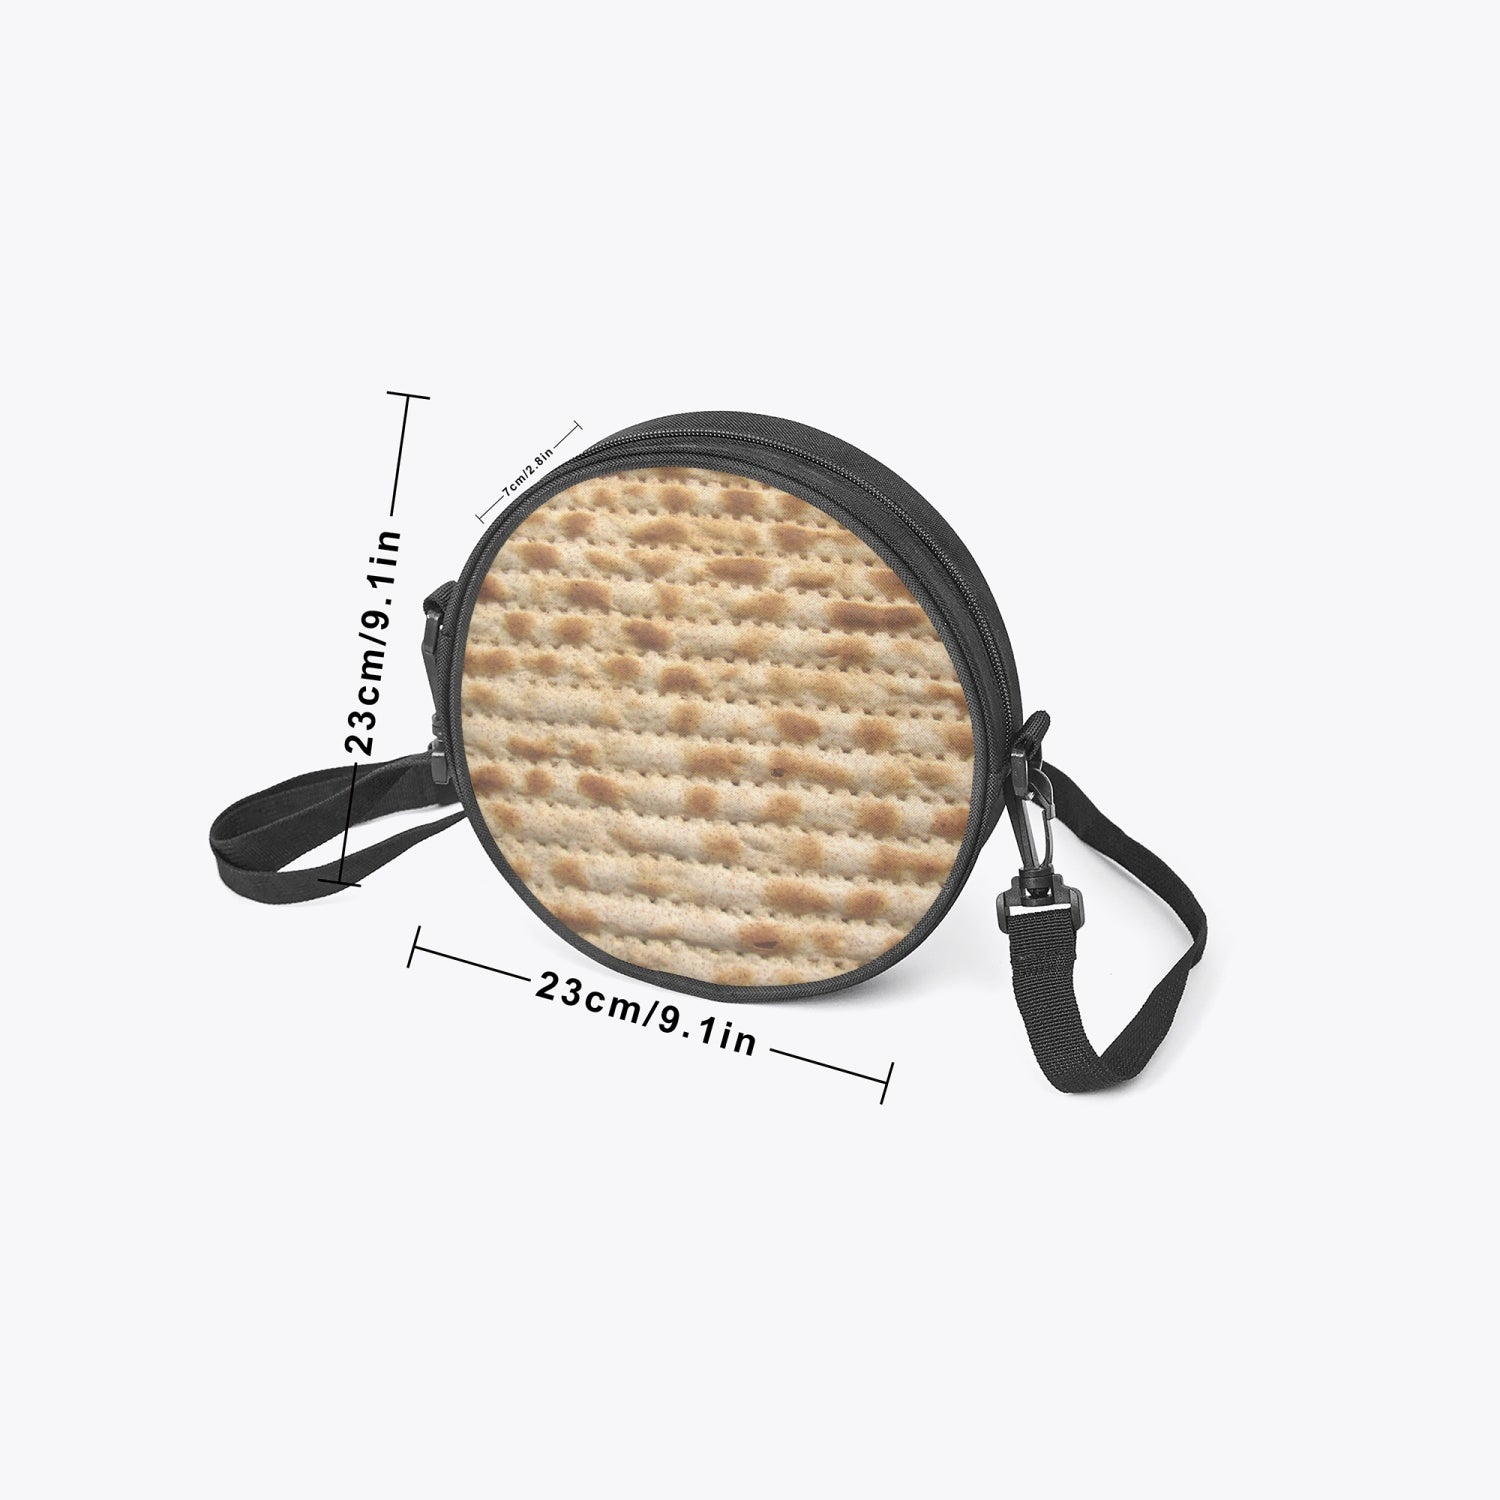 Round Matzah Satchel Bag dimensions